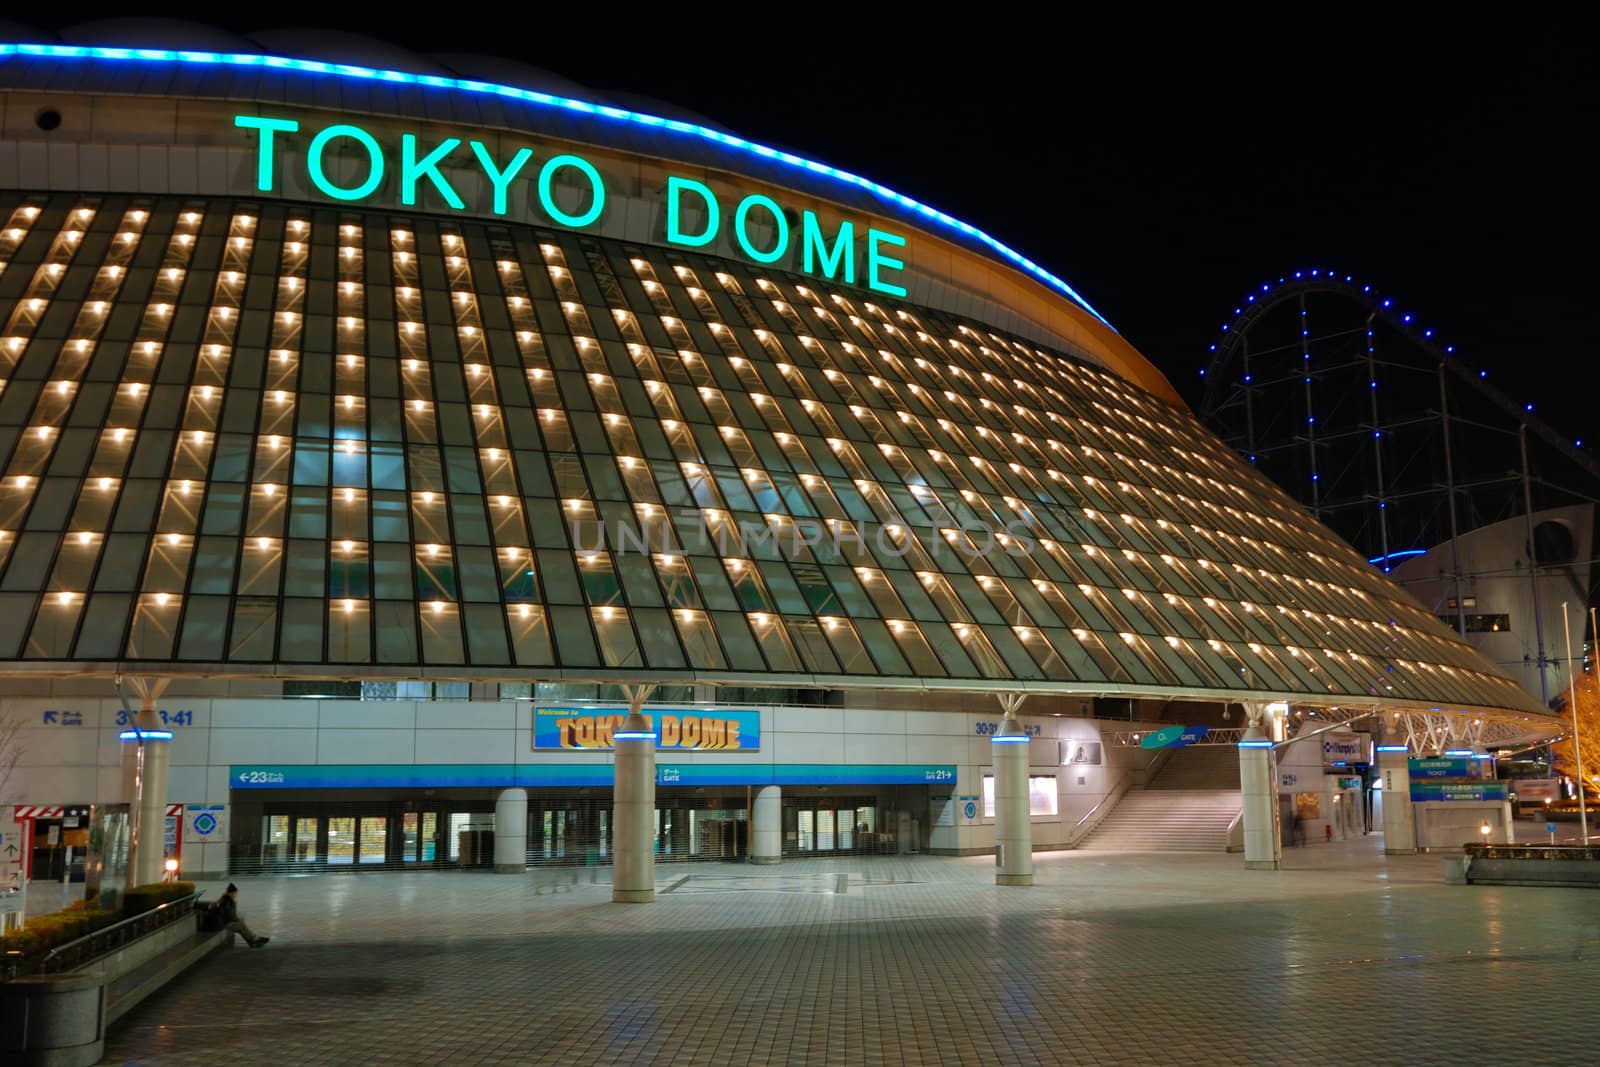 Tokyo dome by yuriz